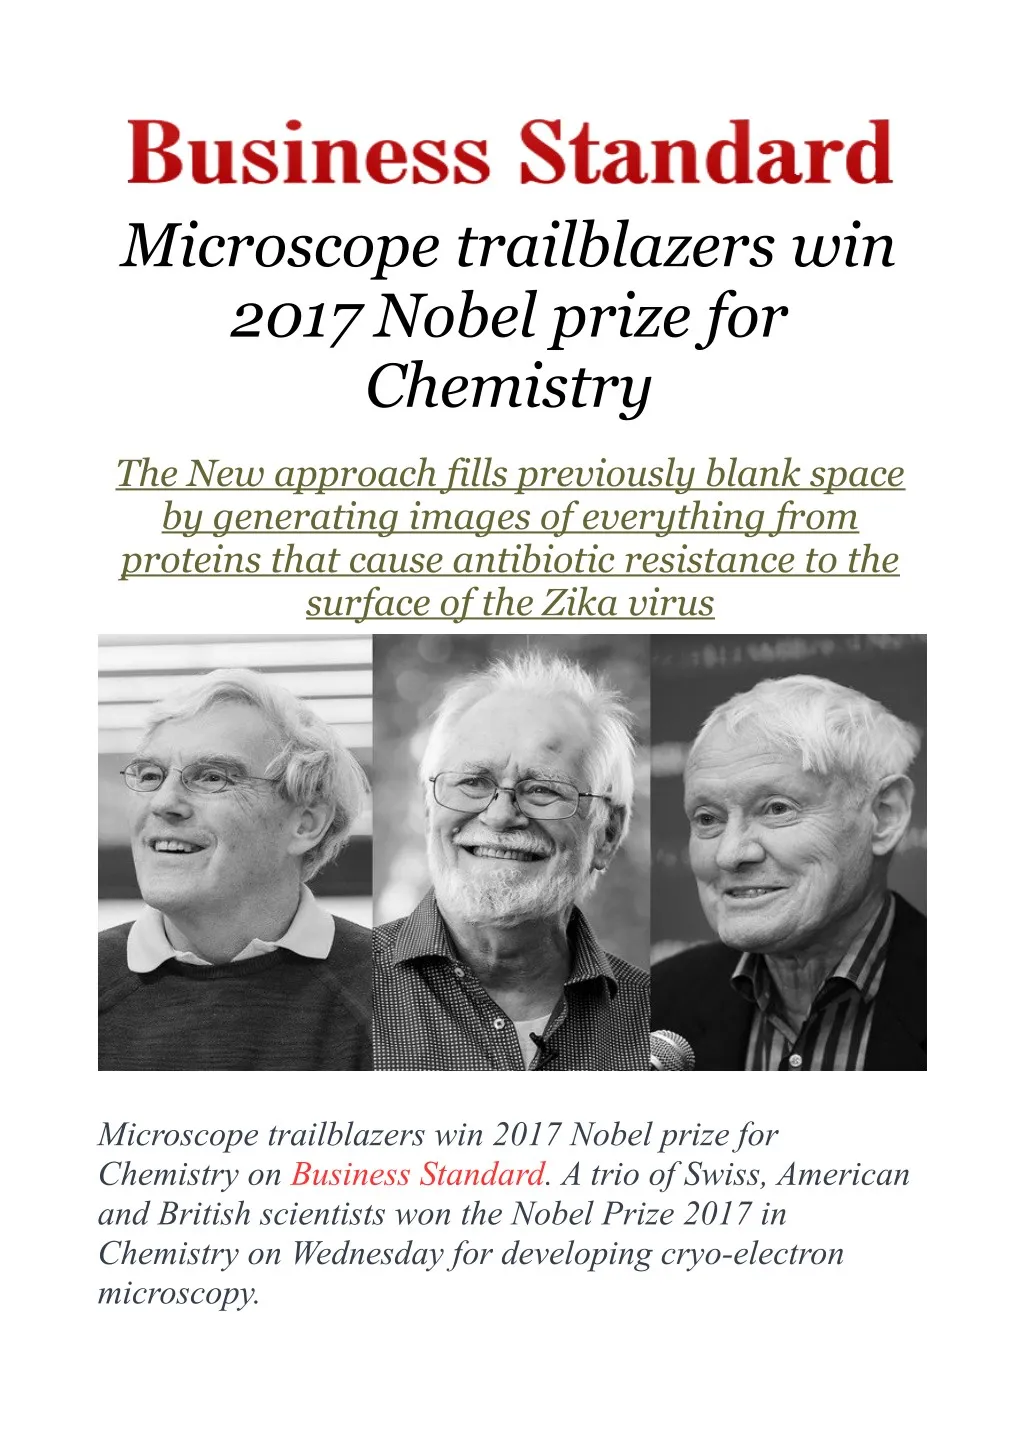 microscope trailblazers win 2017 nobel prize